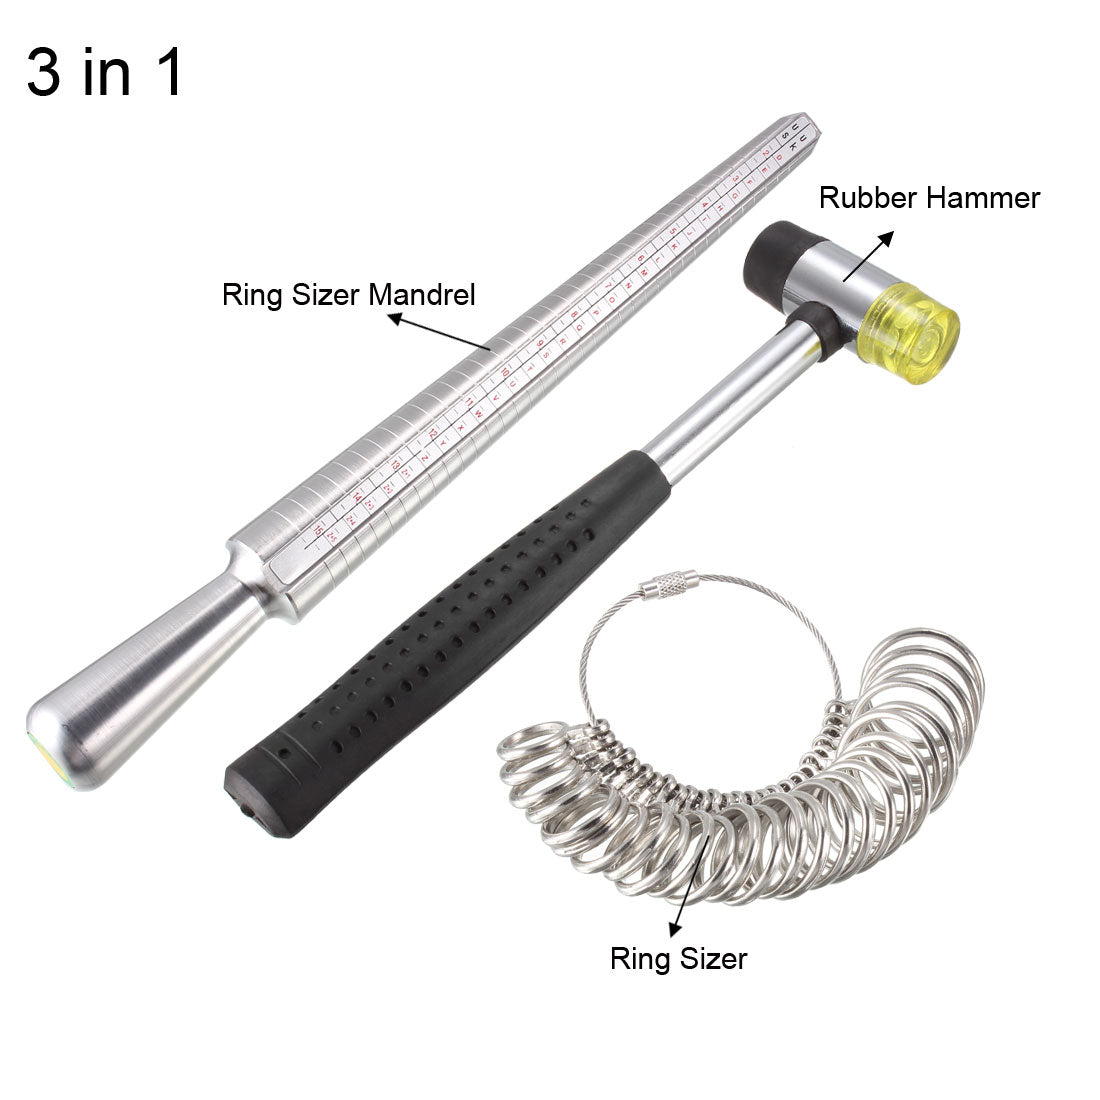 uxcell Uxcell Ring Sizer Mandrel Kit 4 Sizes Aluminum Finger Measuring Stick Ruler Gauge with 26 Zinc Alloy Circle Models Rubber Hammer 1 Set